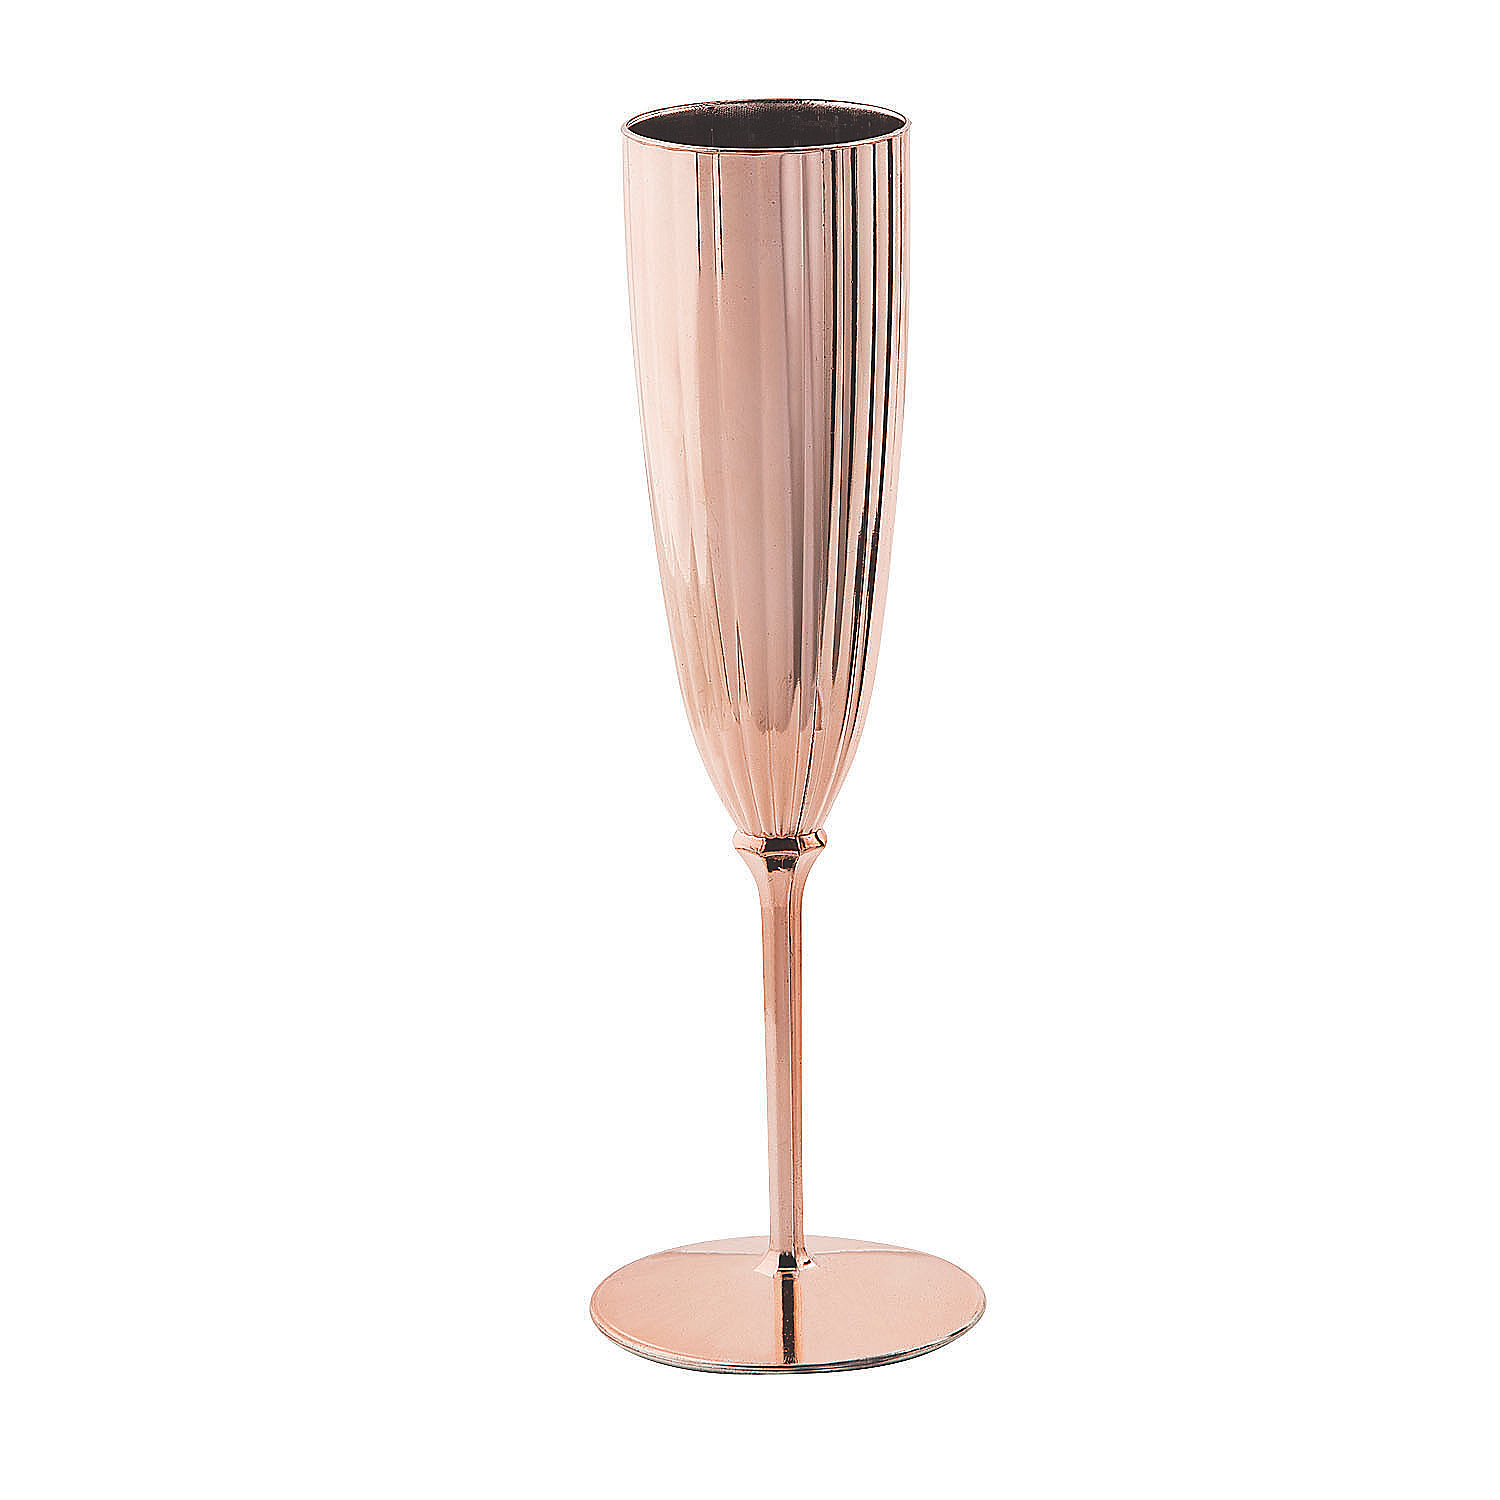 Champagne Flute  12 oz Insulated Flute Glass – Custom Branding